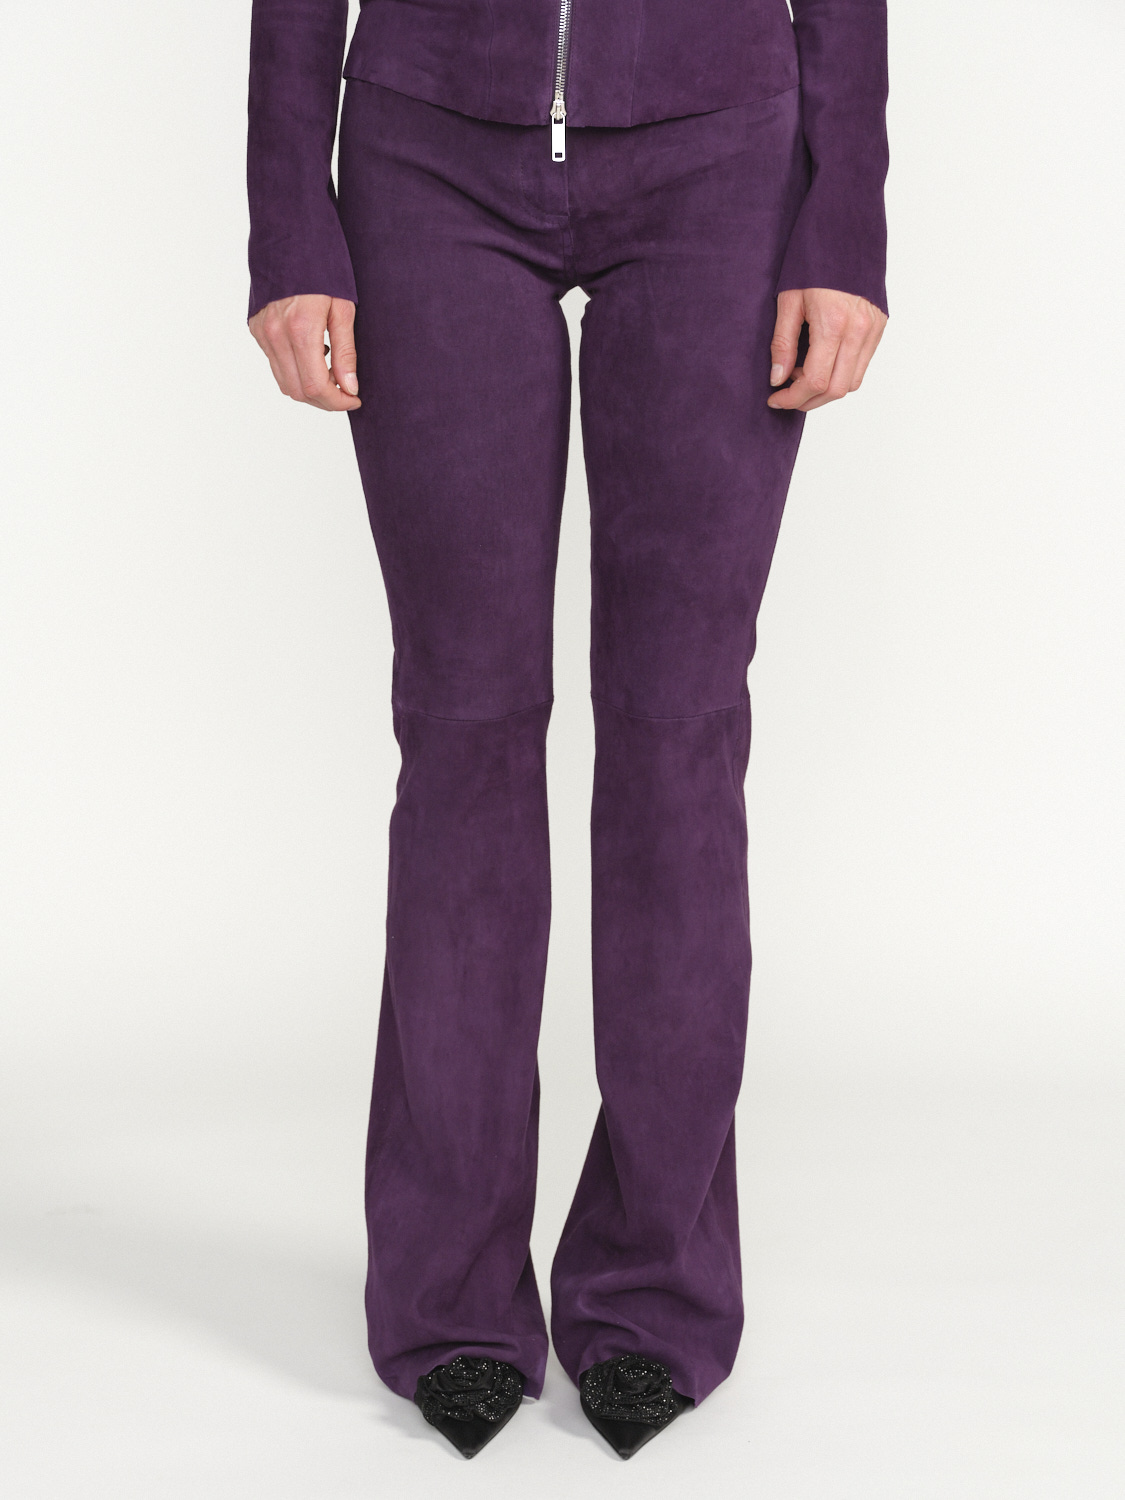 jitrois Pantalon Pika - Bootcuts in suede leather purple 38